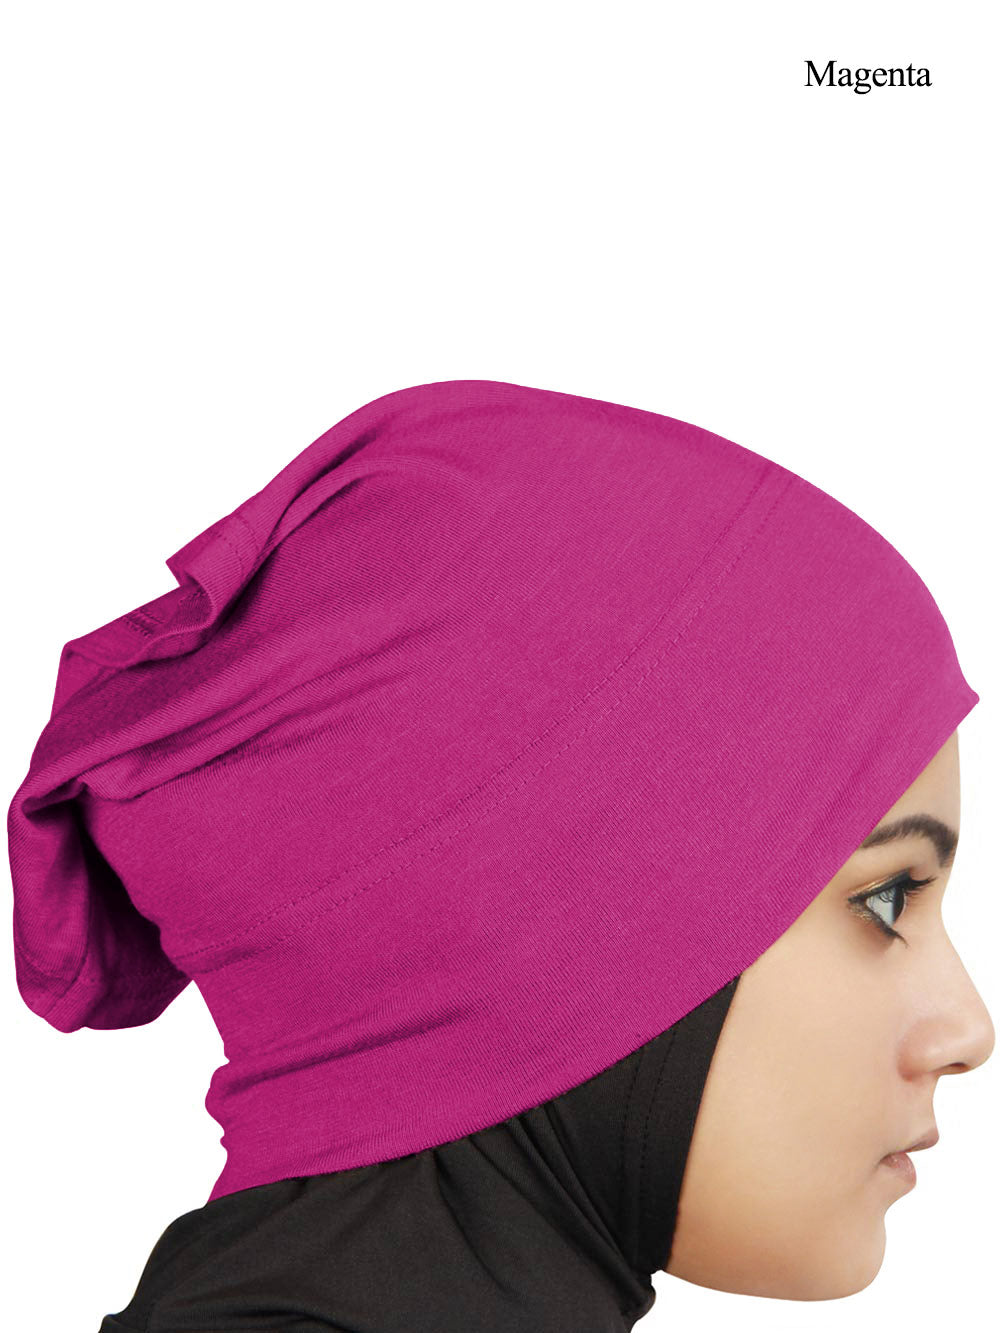 Two Piece Instant Magenta Viscose Jersey Hijab